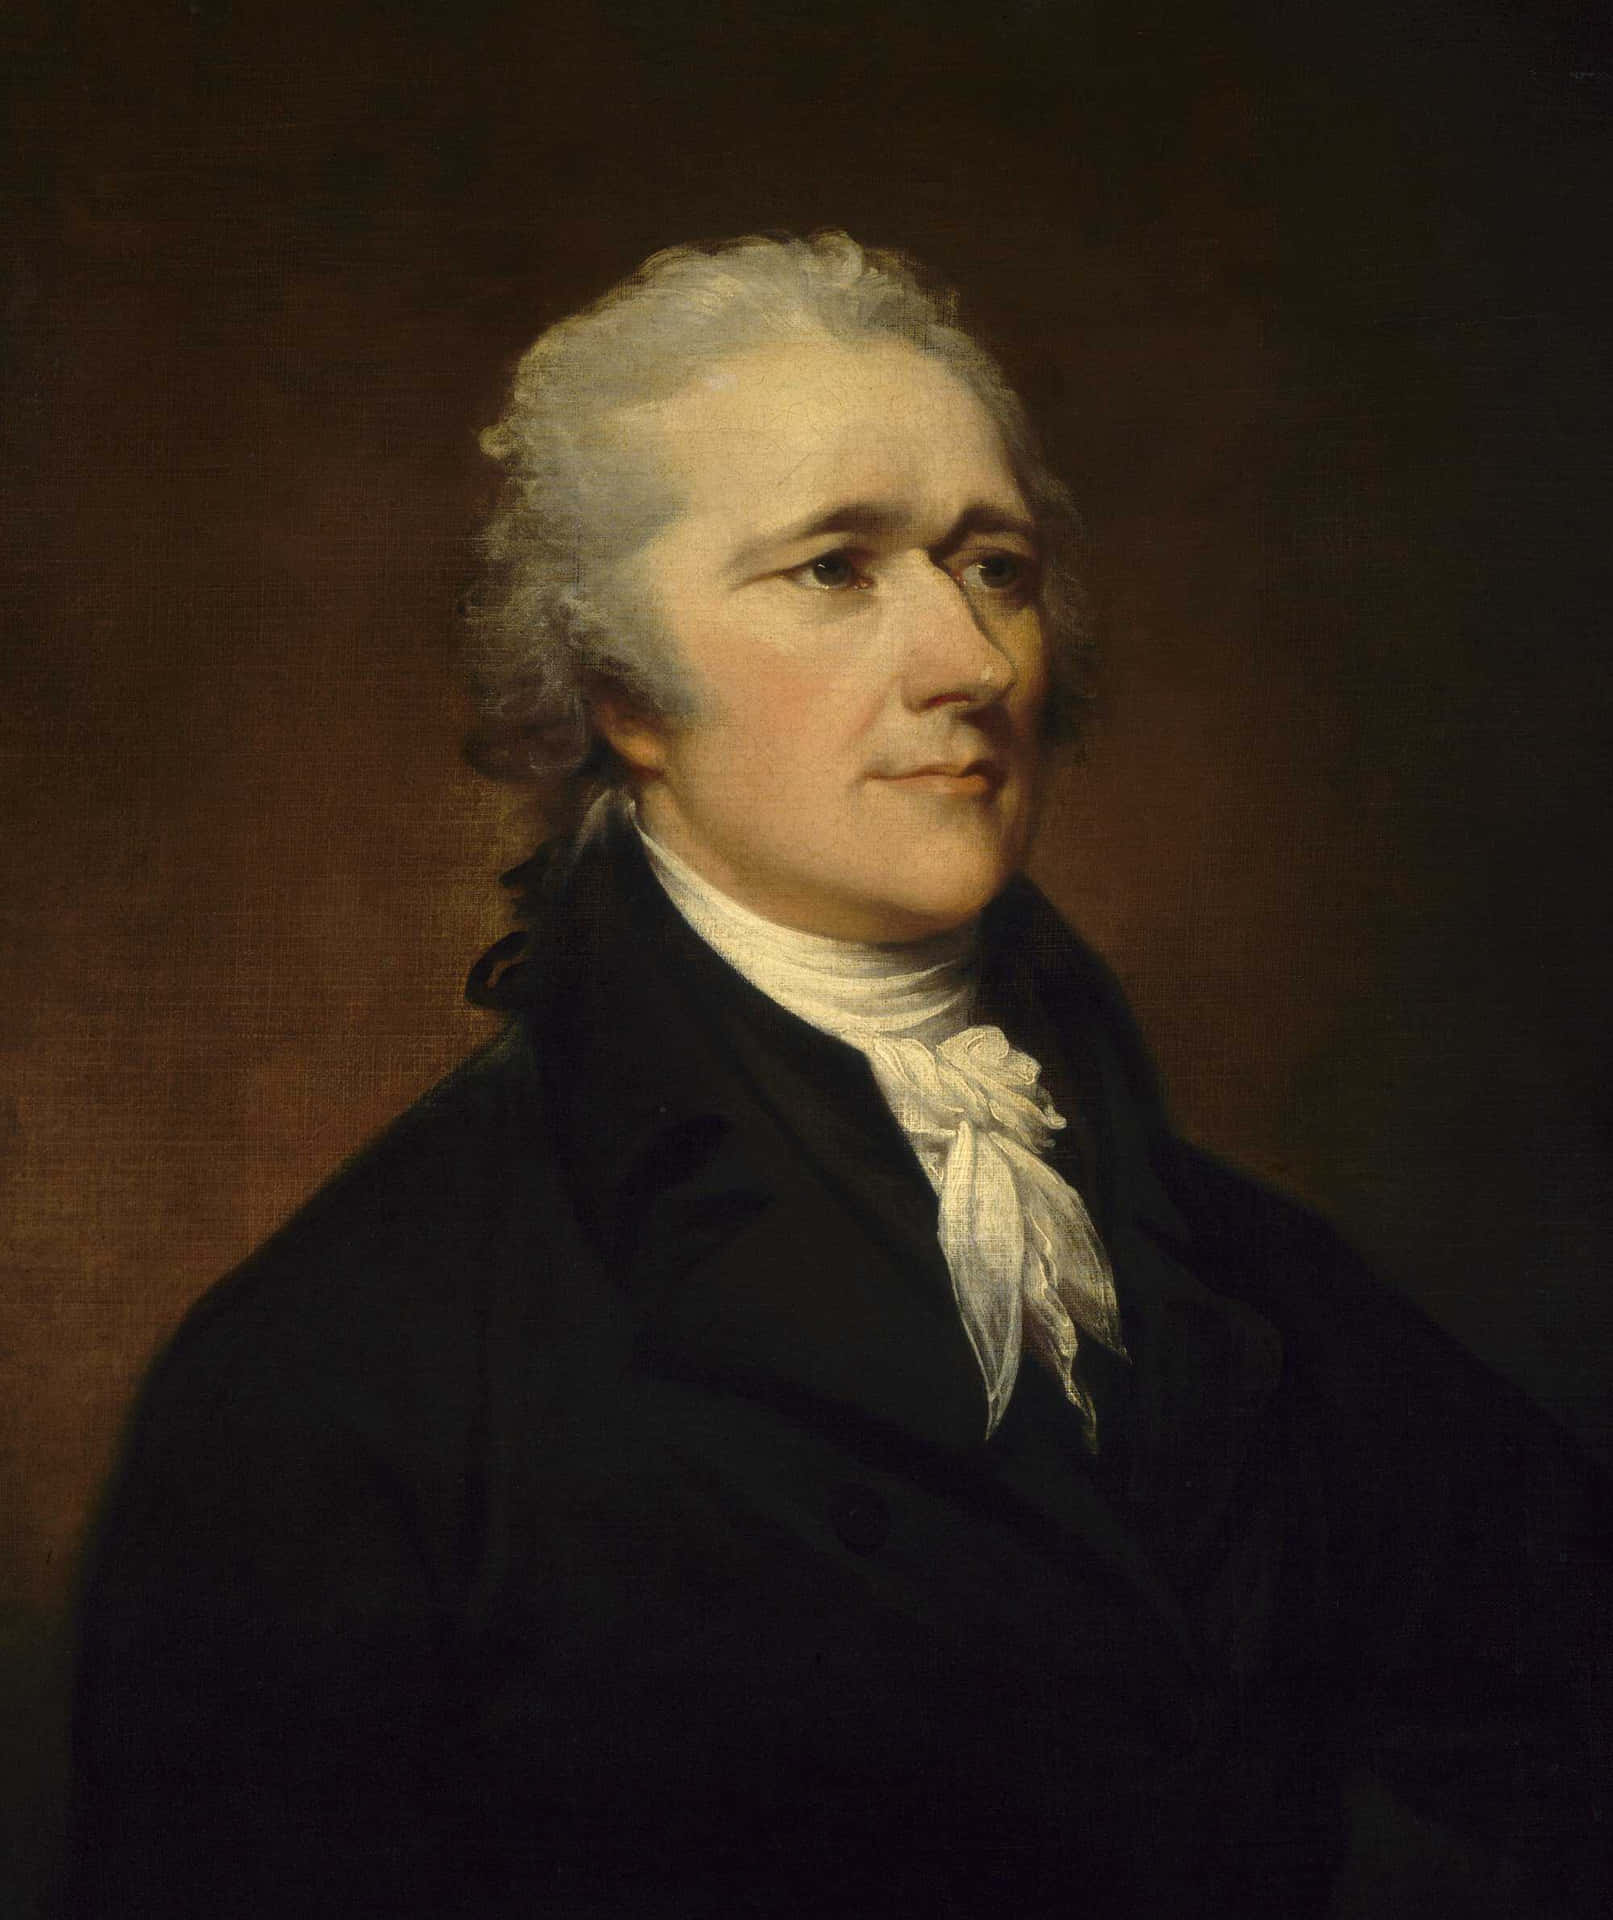 Alexander Hamilton - Founding Father of America